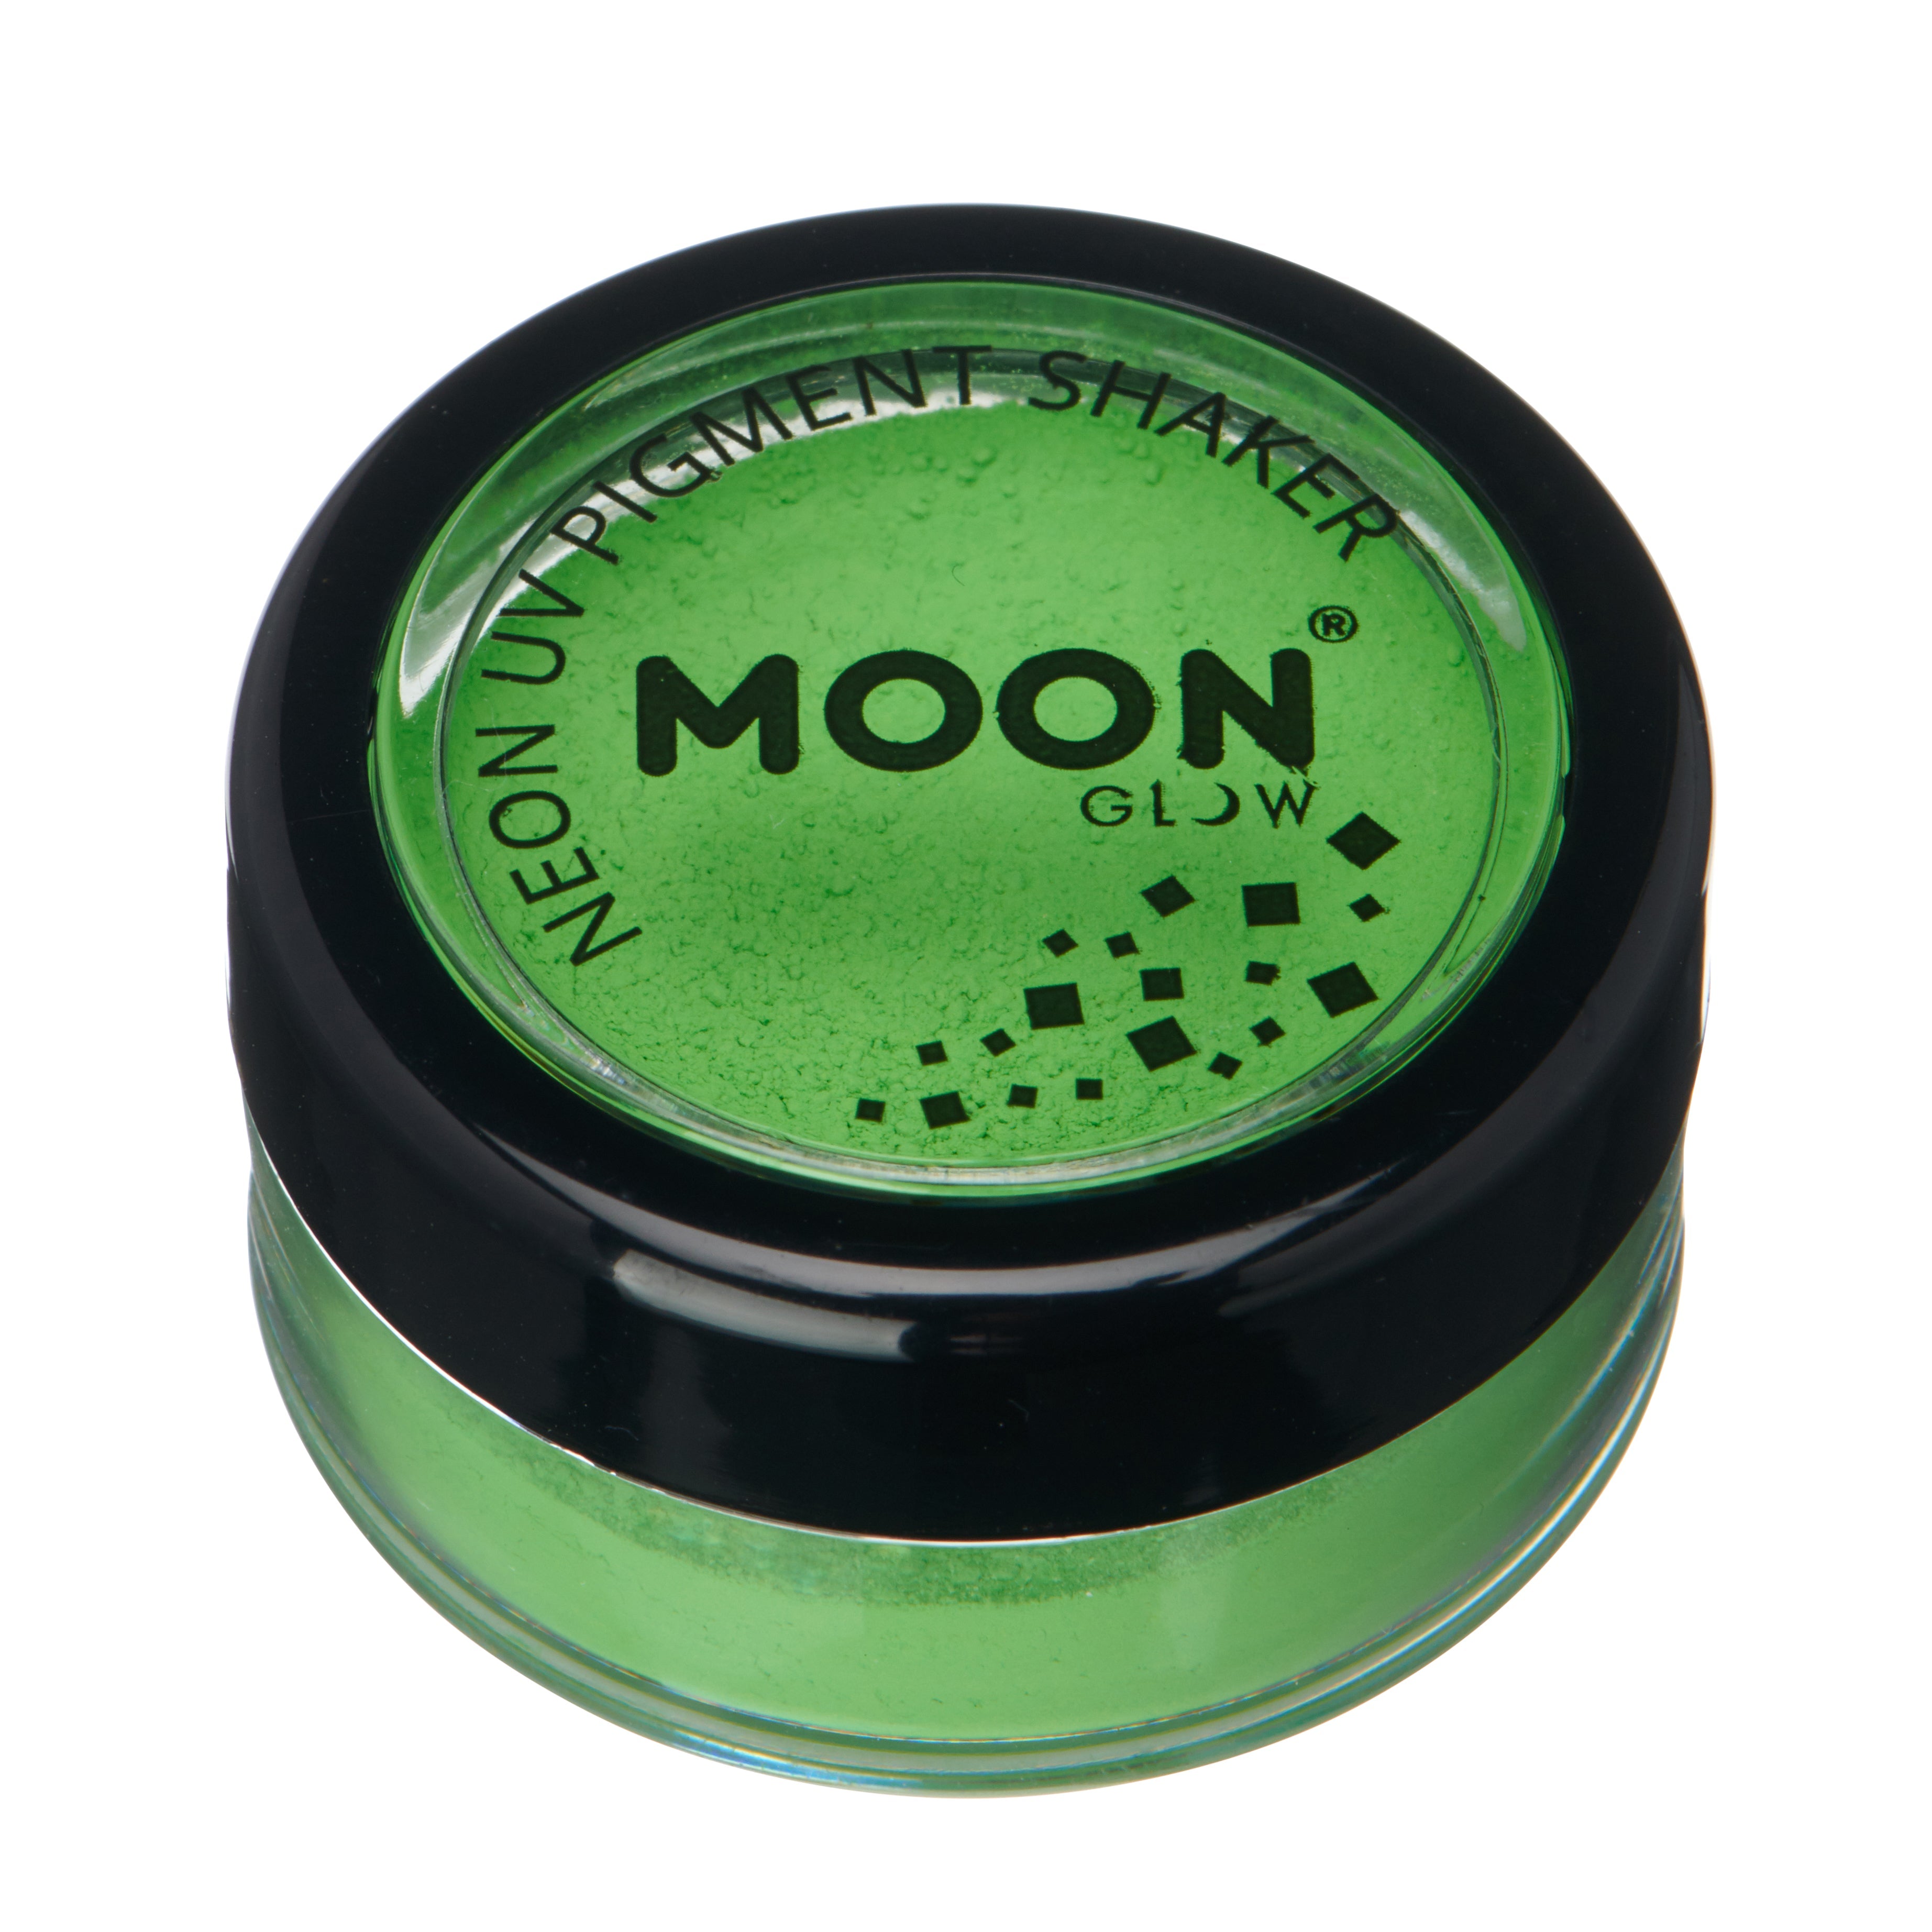 Intense Green - Neon UV Glow Blacklight Pigment Shaker, 3g. Cosmetically certified, FDA & Health Canada compliant, cruelty free and vegan.